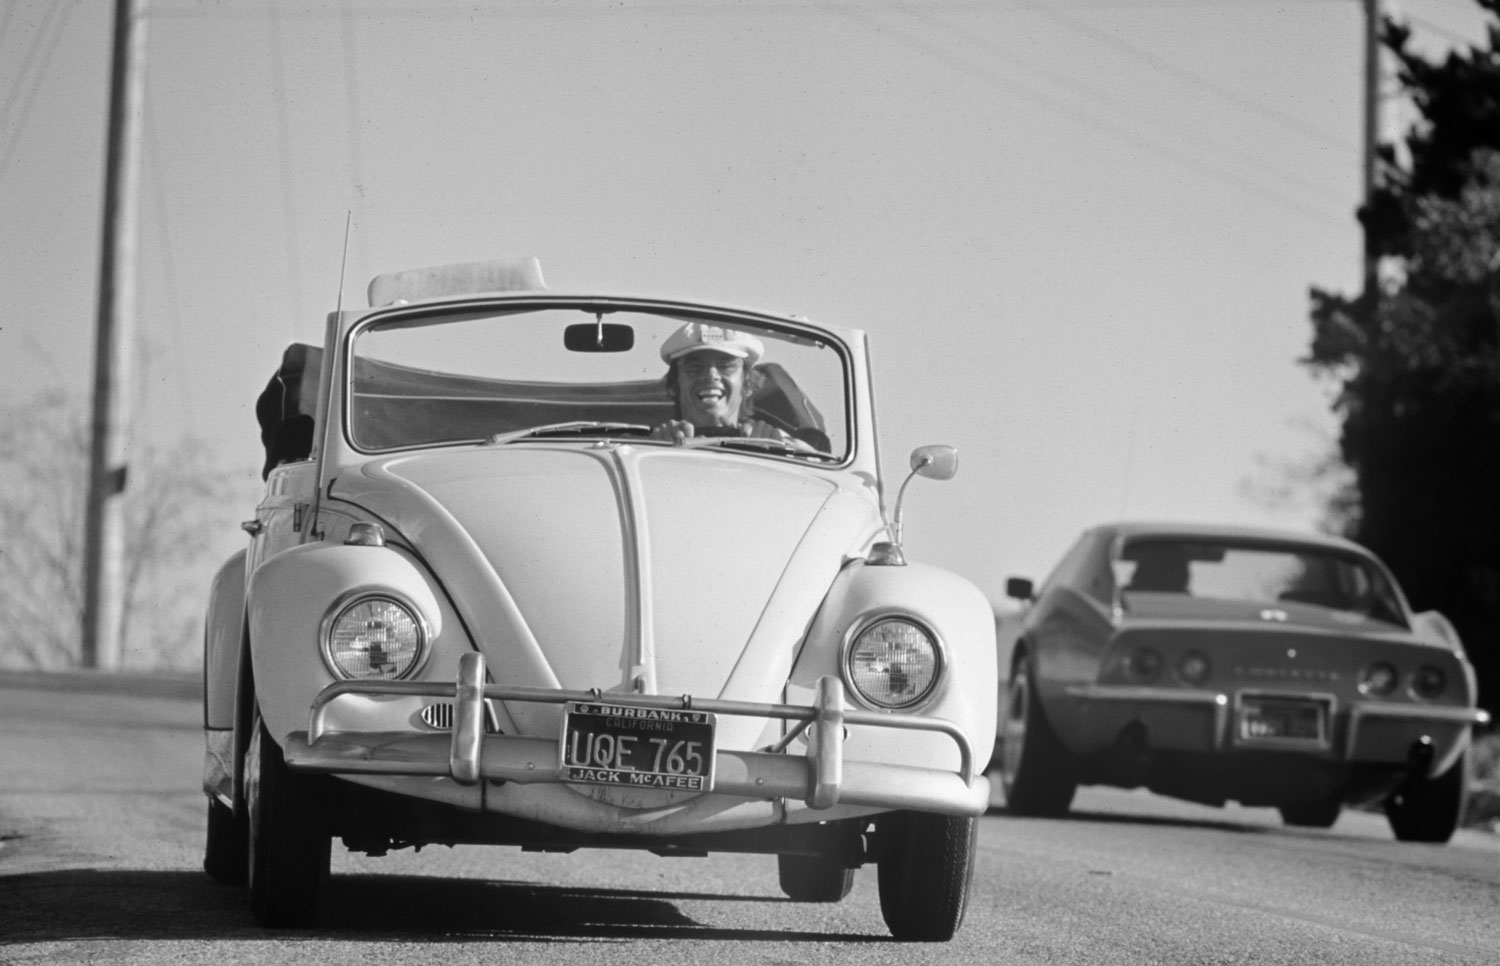 Jack Nicholson drives his Volkswagen Convertible in 1969